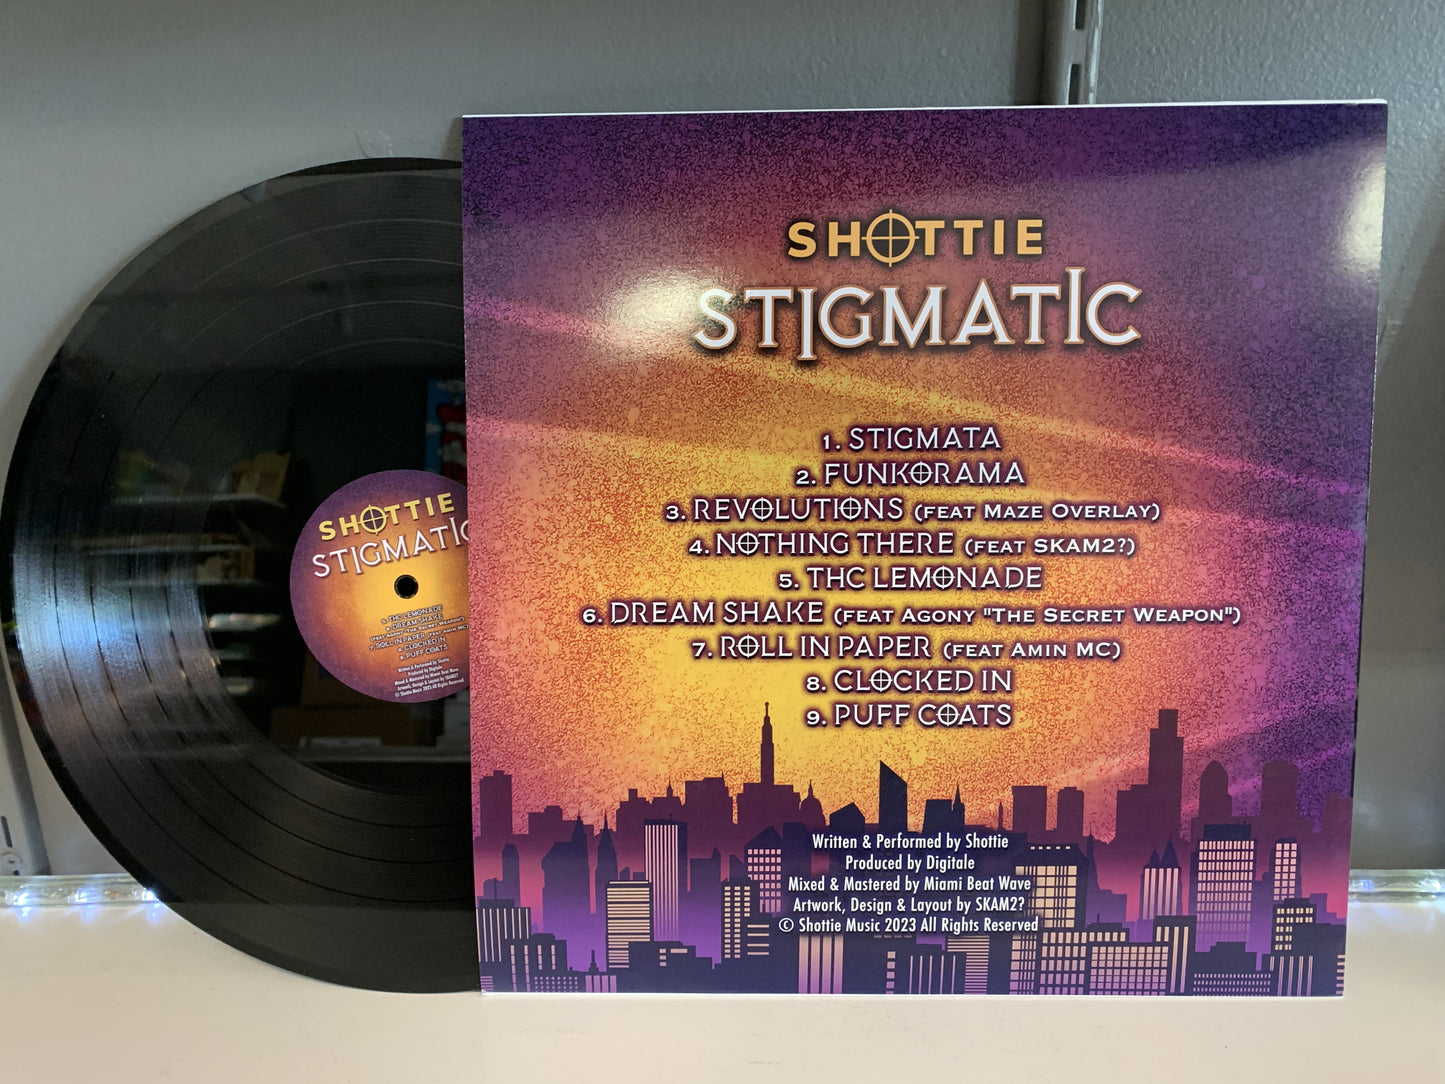 Shottie - STIGMATIC 12" Vinyl Record (LIMITED)